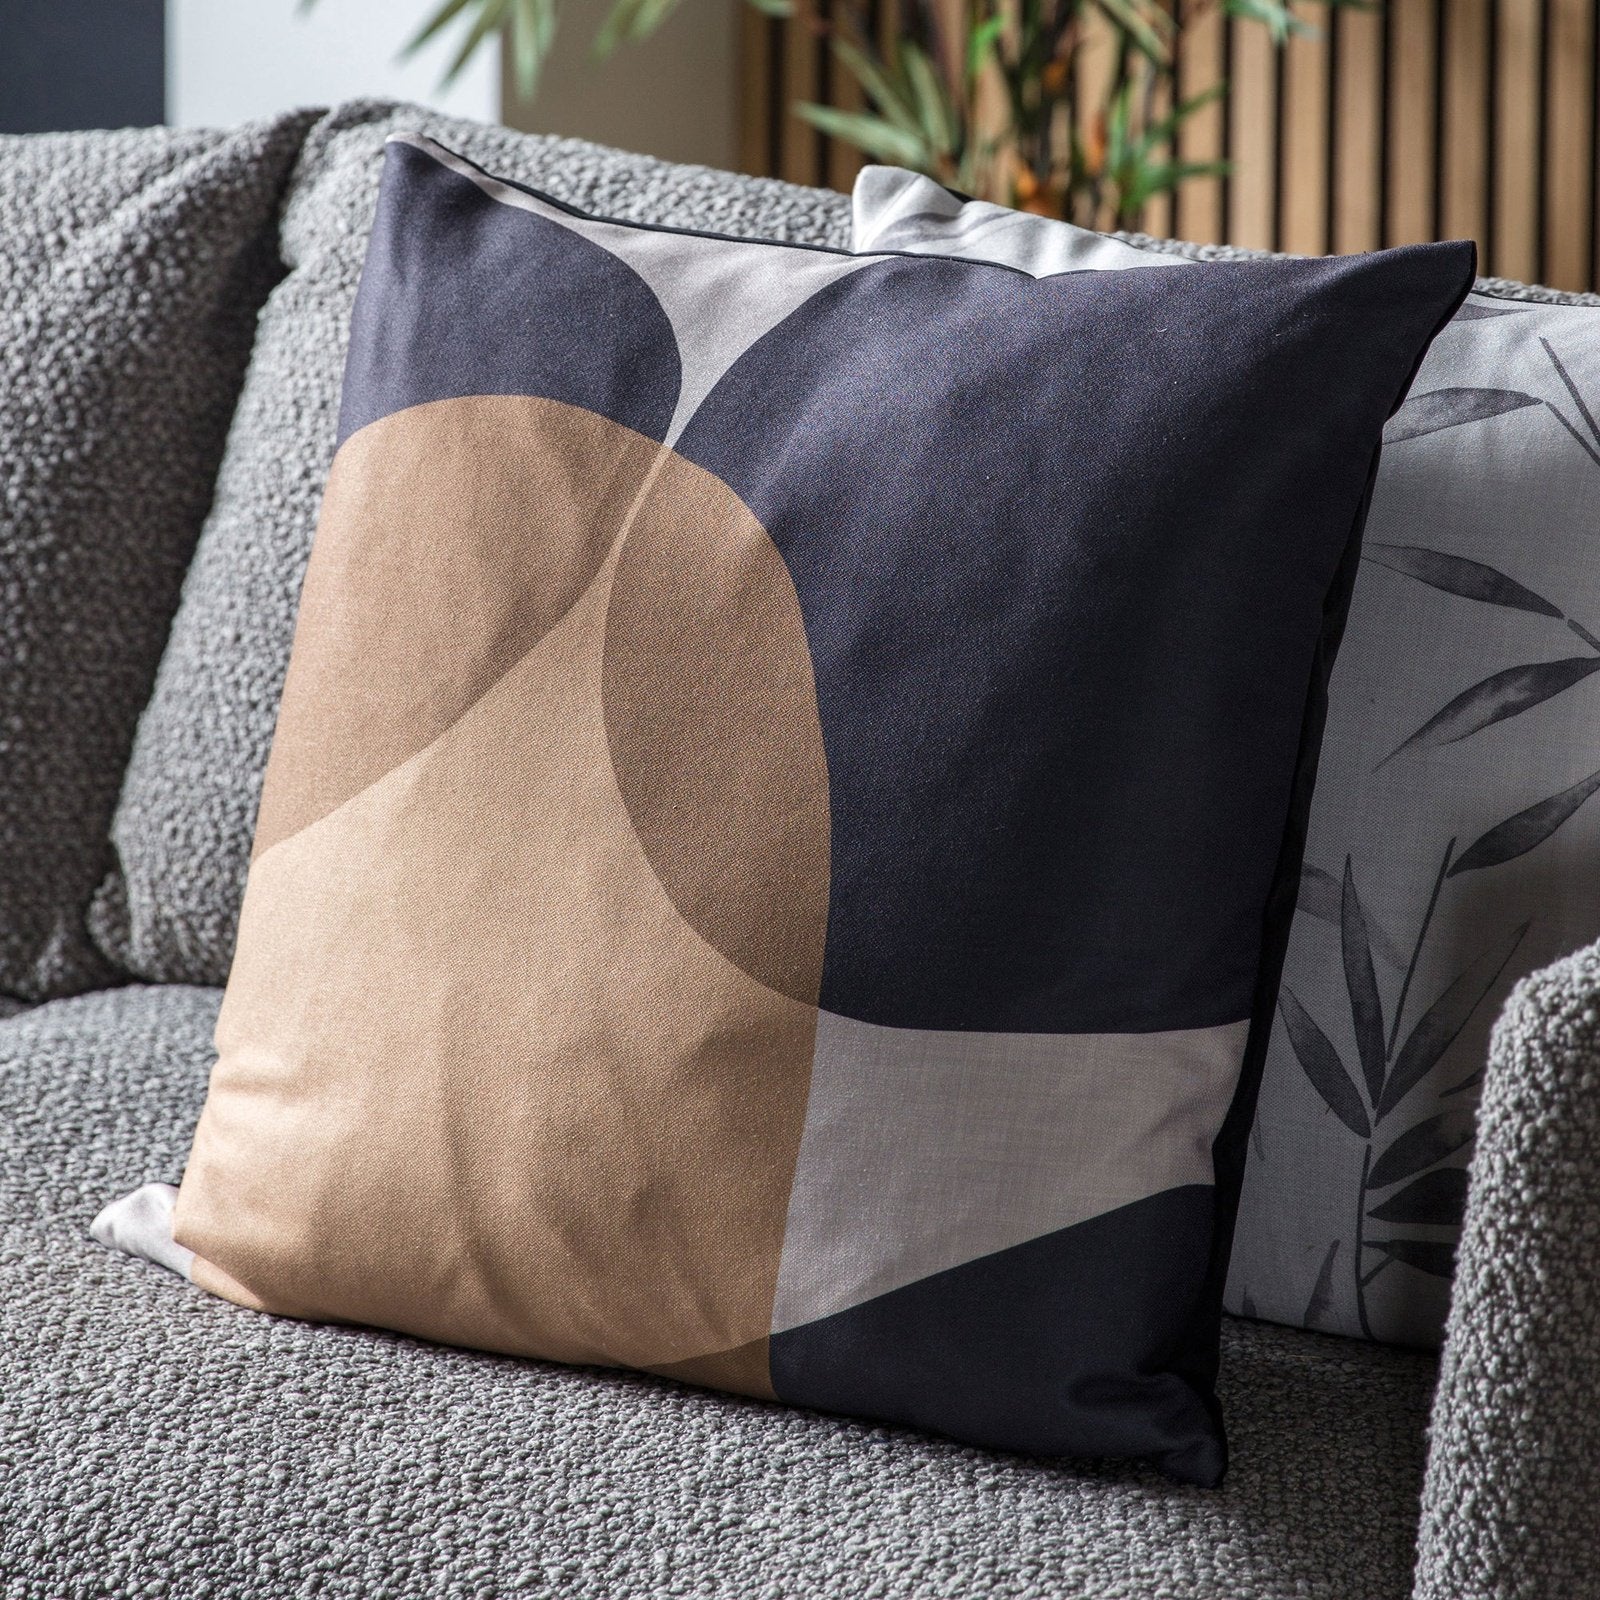 Abstract Shape Cushion 55 x 55cm - Velvet Back - Patterned Cushion